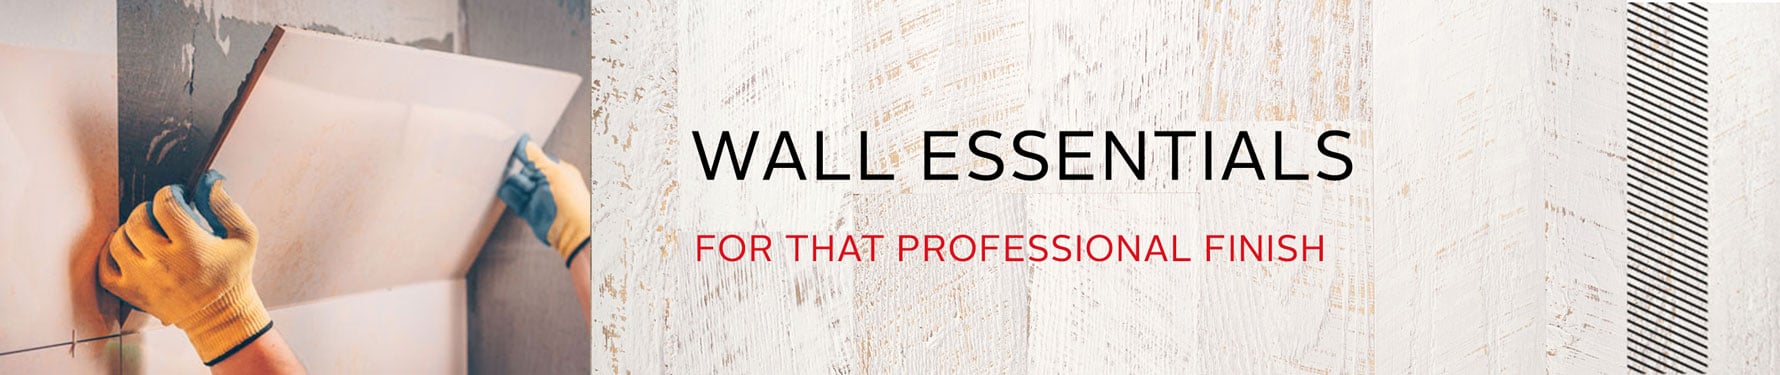 Wall Essentials